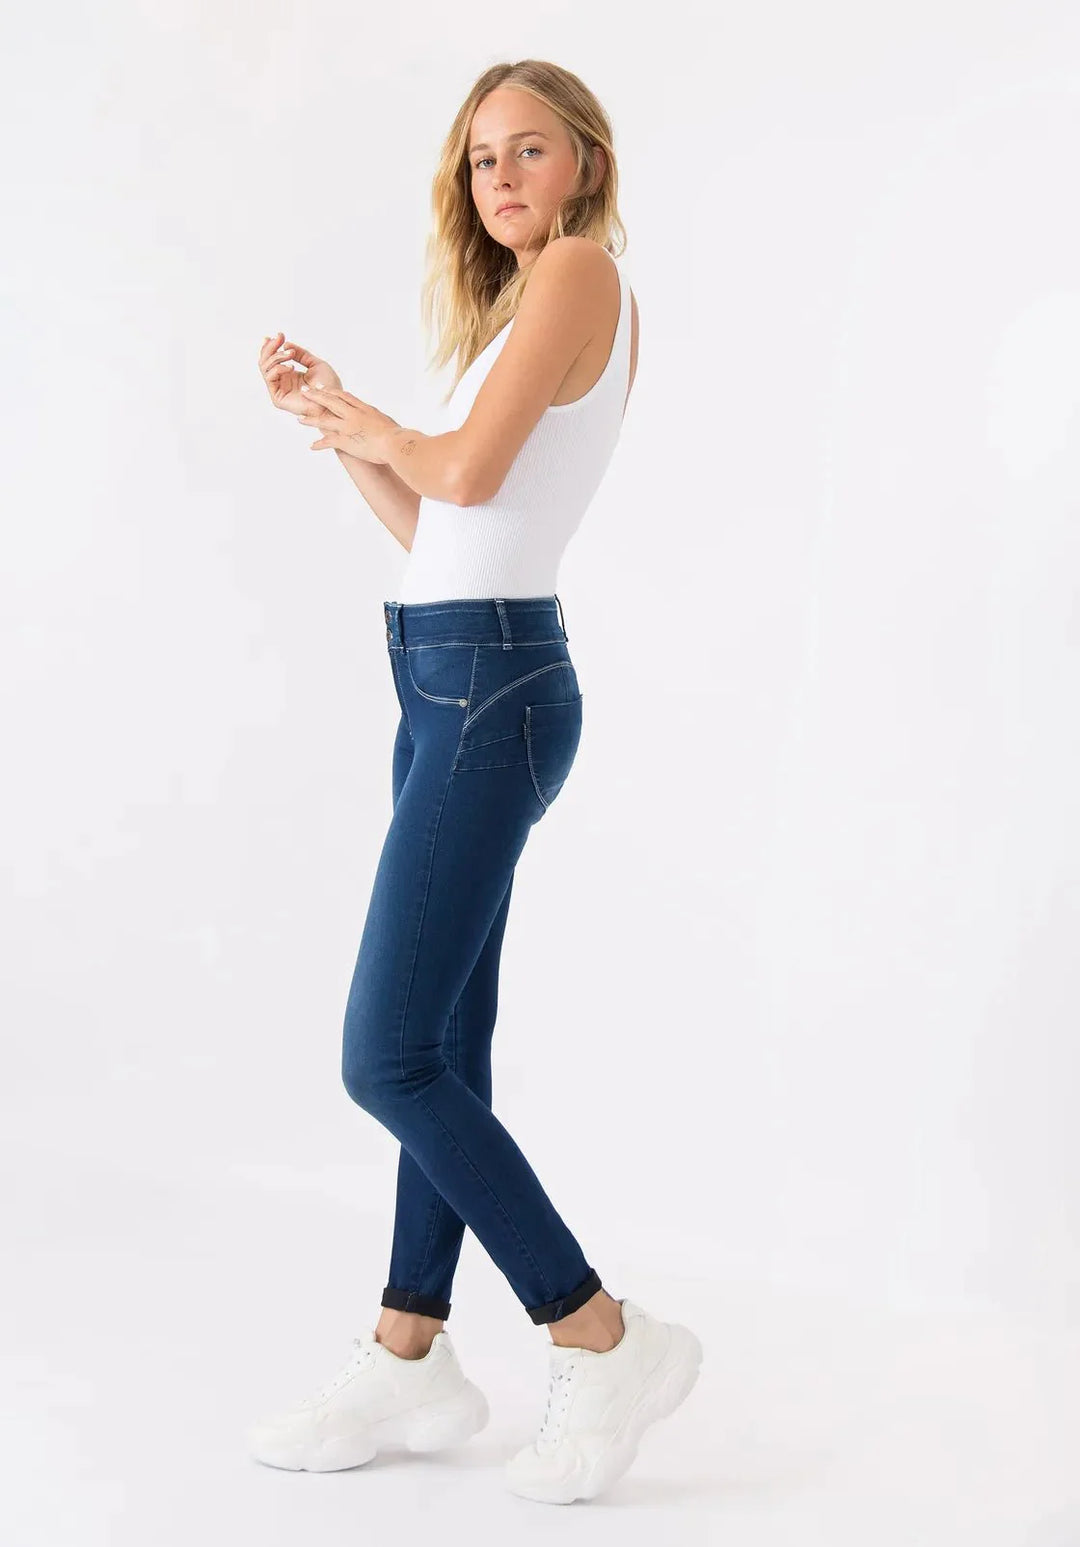 Tiffosi One Size Jeans Double_Up_Comfort_4 Blue Denim - Sitara Morgan